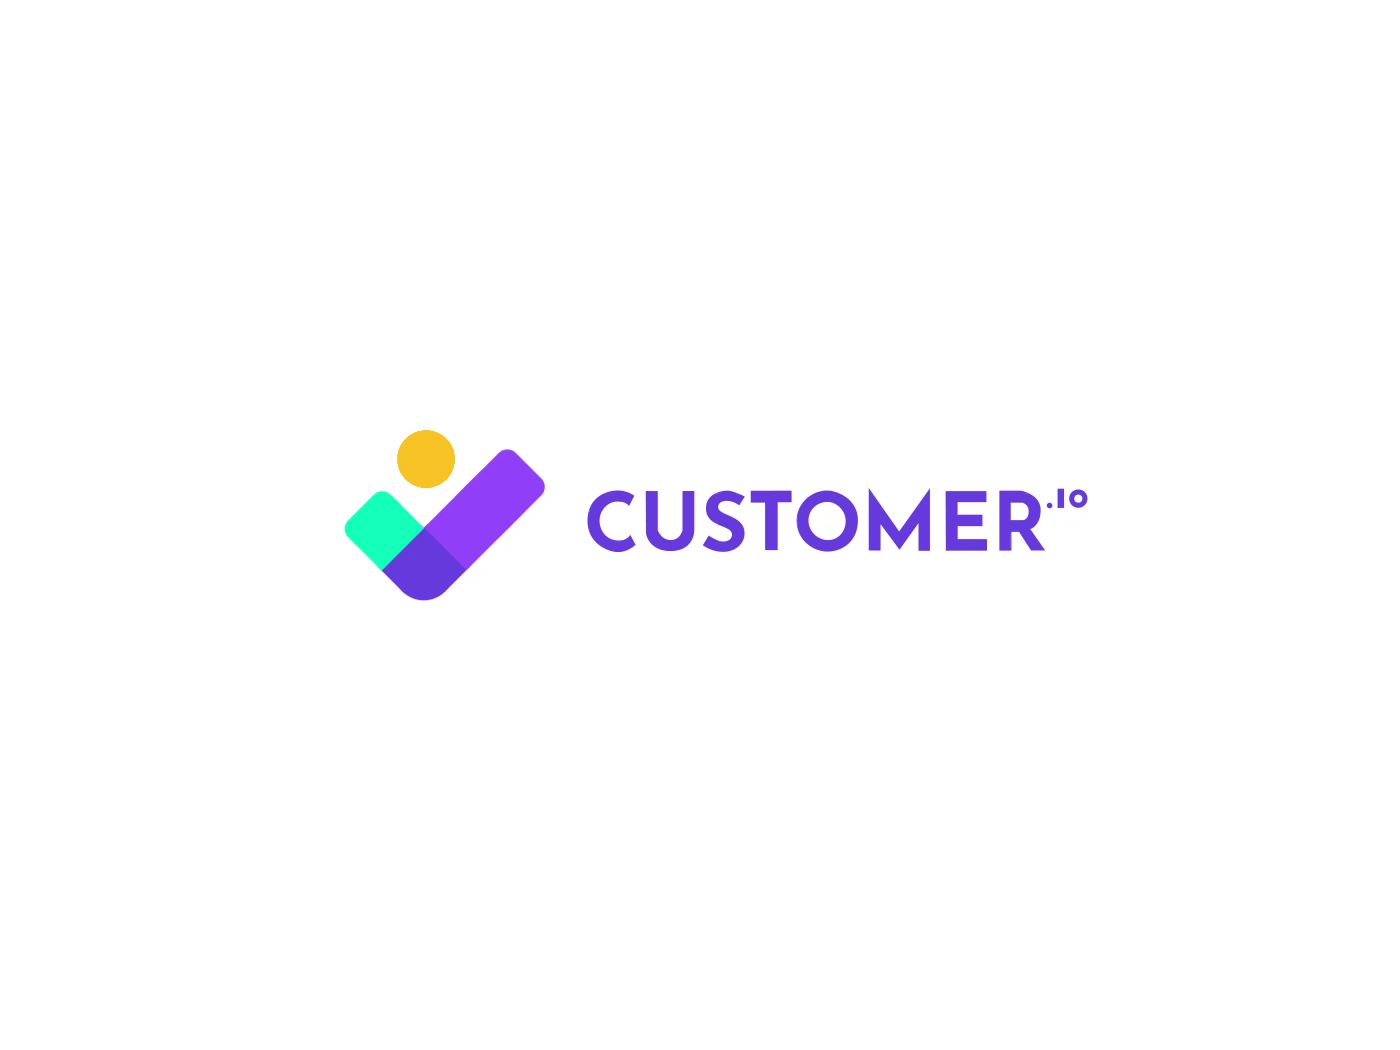 Logos io. Customer io logo. Full best animation logos Мастеркард. Мастеркард PNG без фона. Логотип ио приглашение.